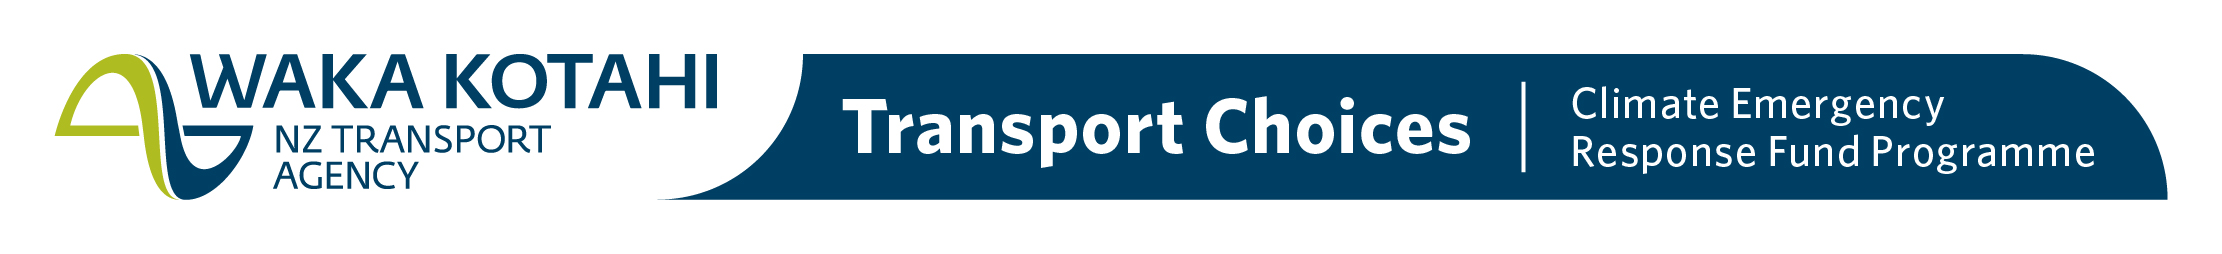 Logo for Waka Kotahi, Transport Choices, and Climate Emergency Response Fund Programme